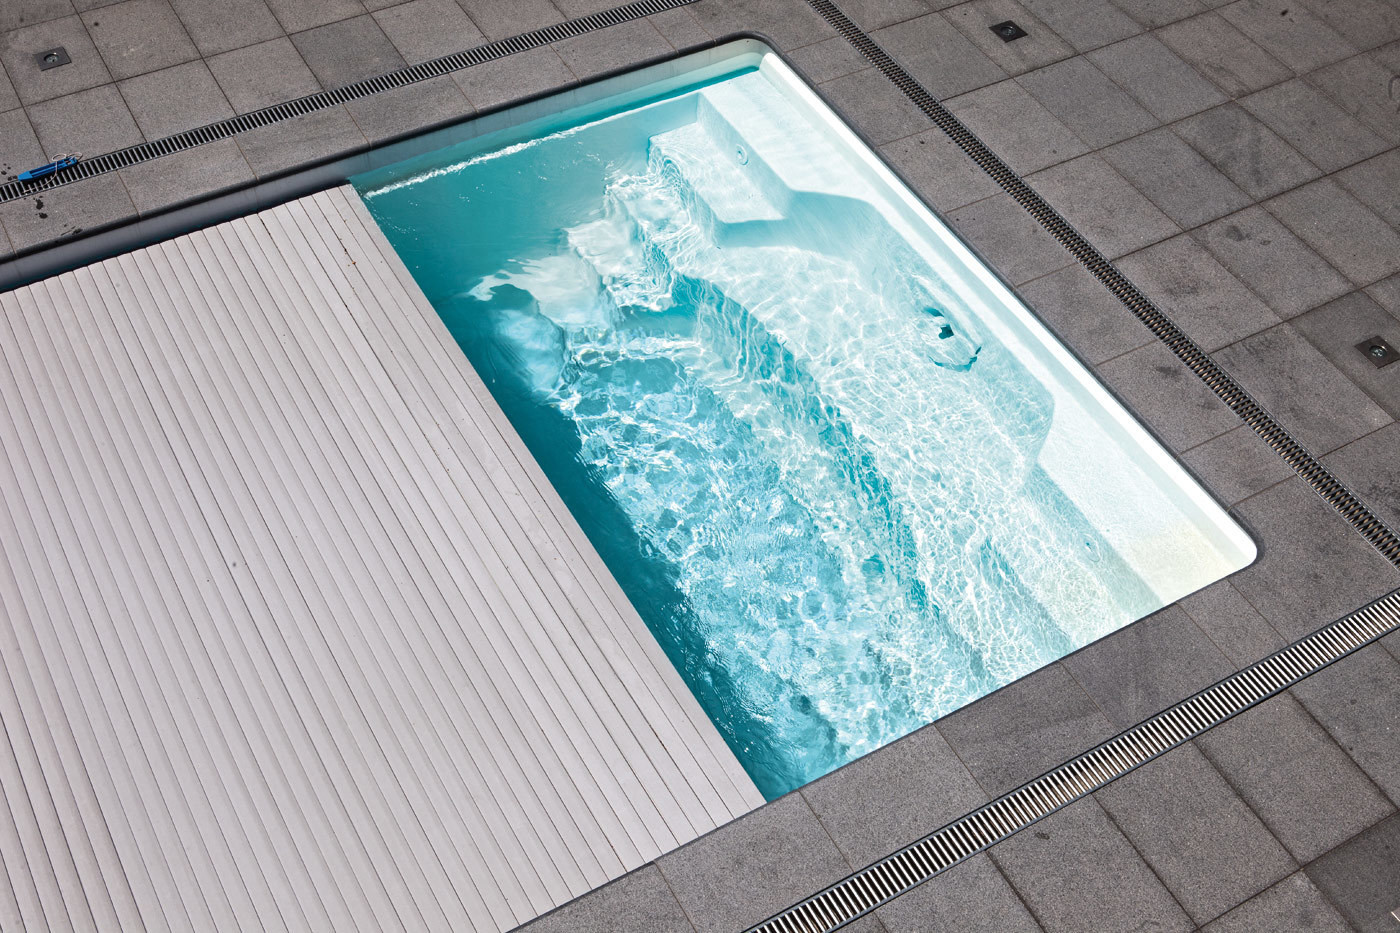 kilo 8.0m ceramic fibreglass core pool steps